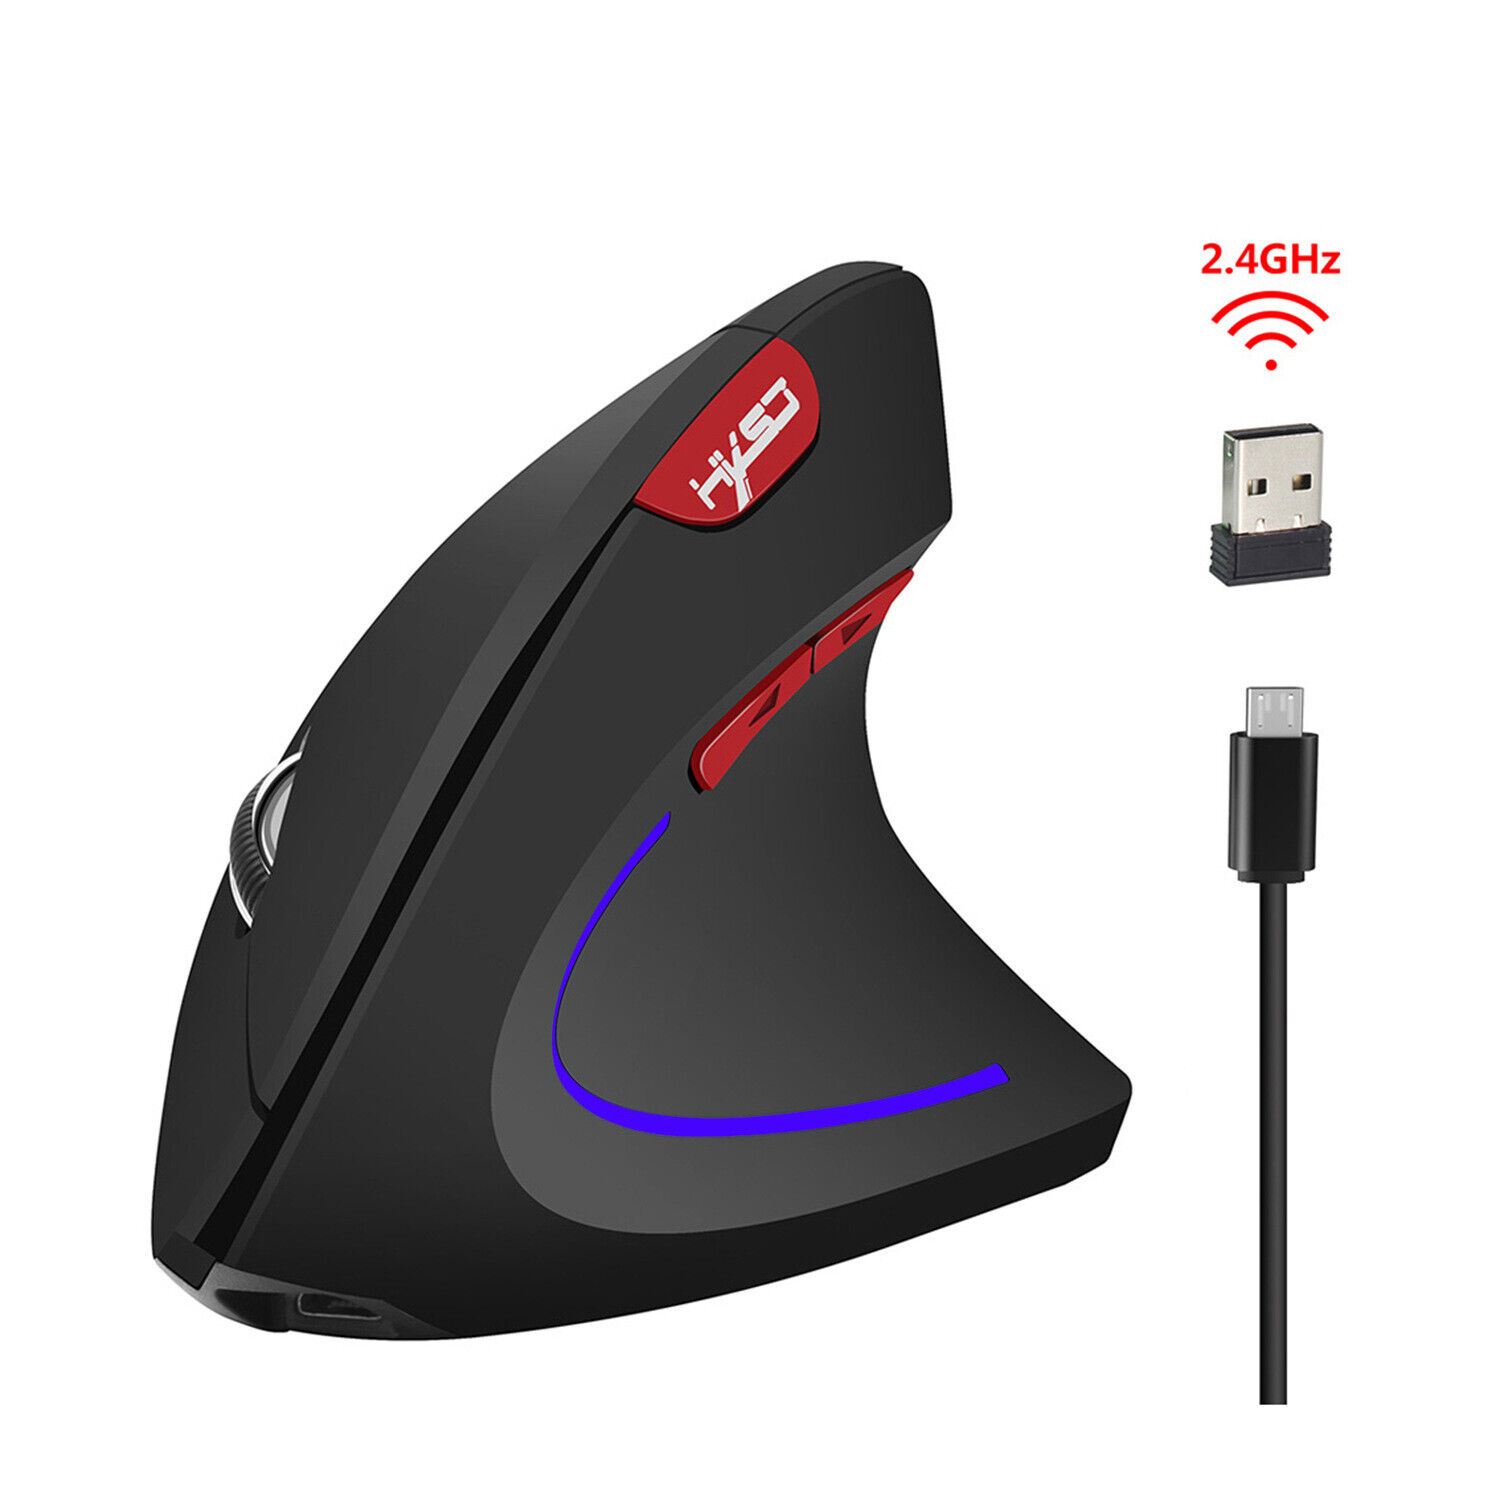 HXSJ USB Wireless Vertical Mice 2.4GHz PC Optical Gaming Mouse Ergonomic 2400DPI